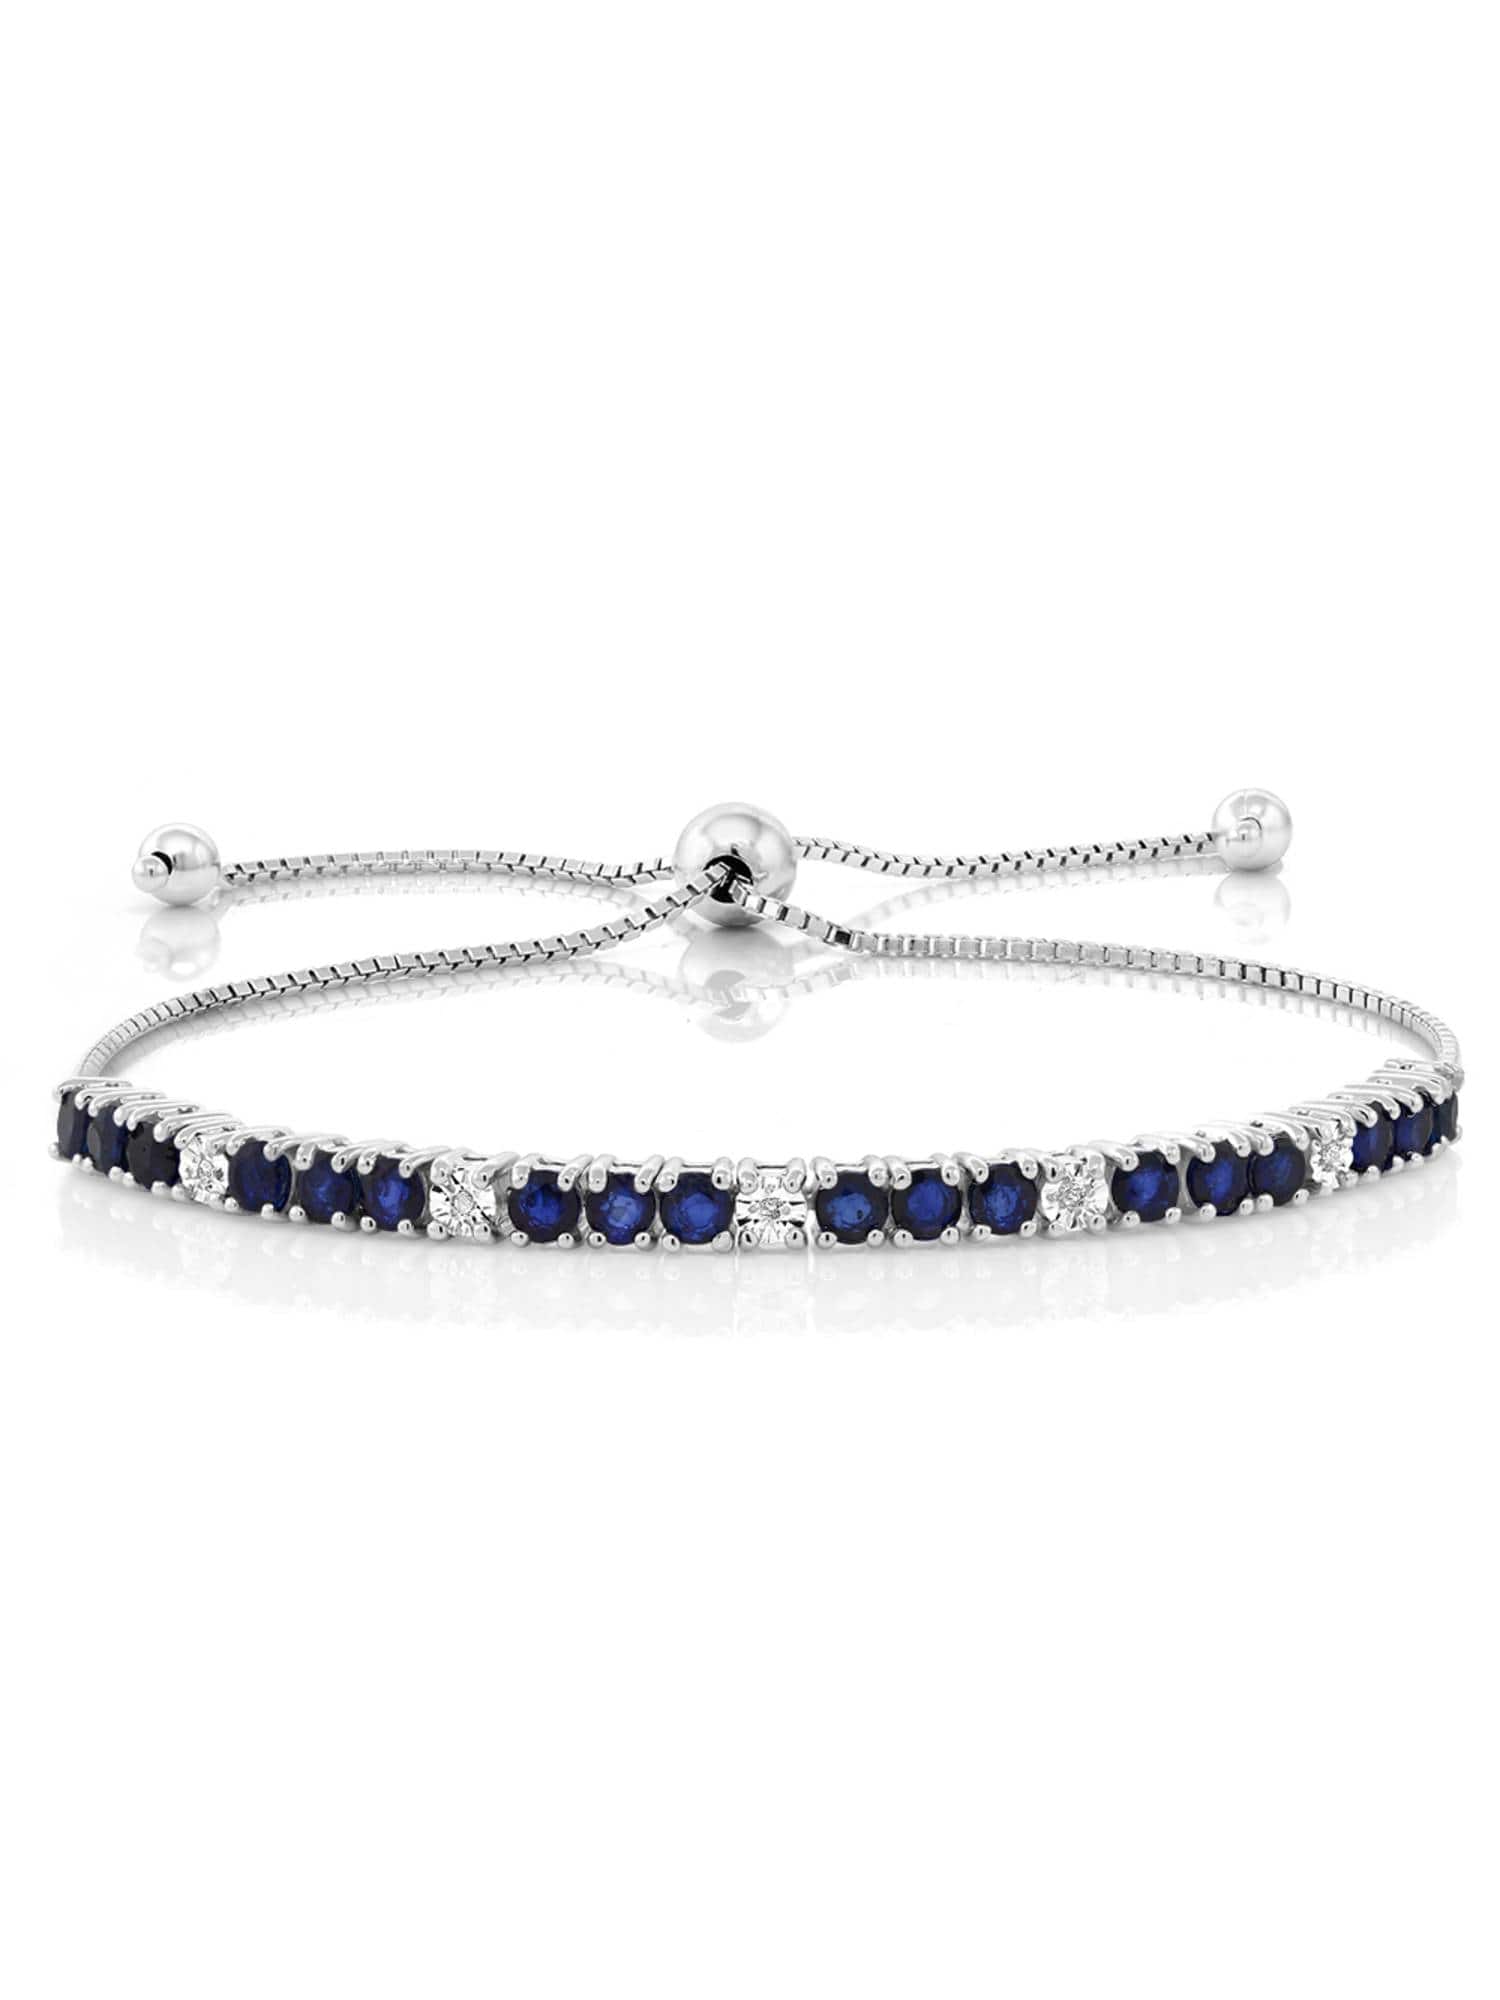 5 X 7 MM. Oval Cabochon Blue Sapphire Bracelet 7